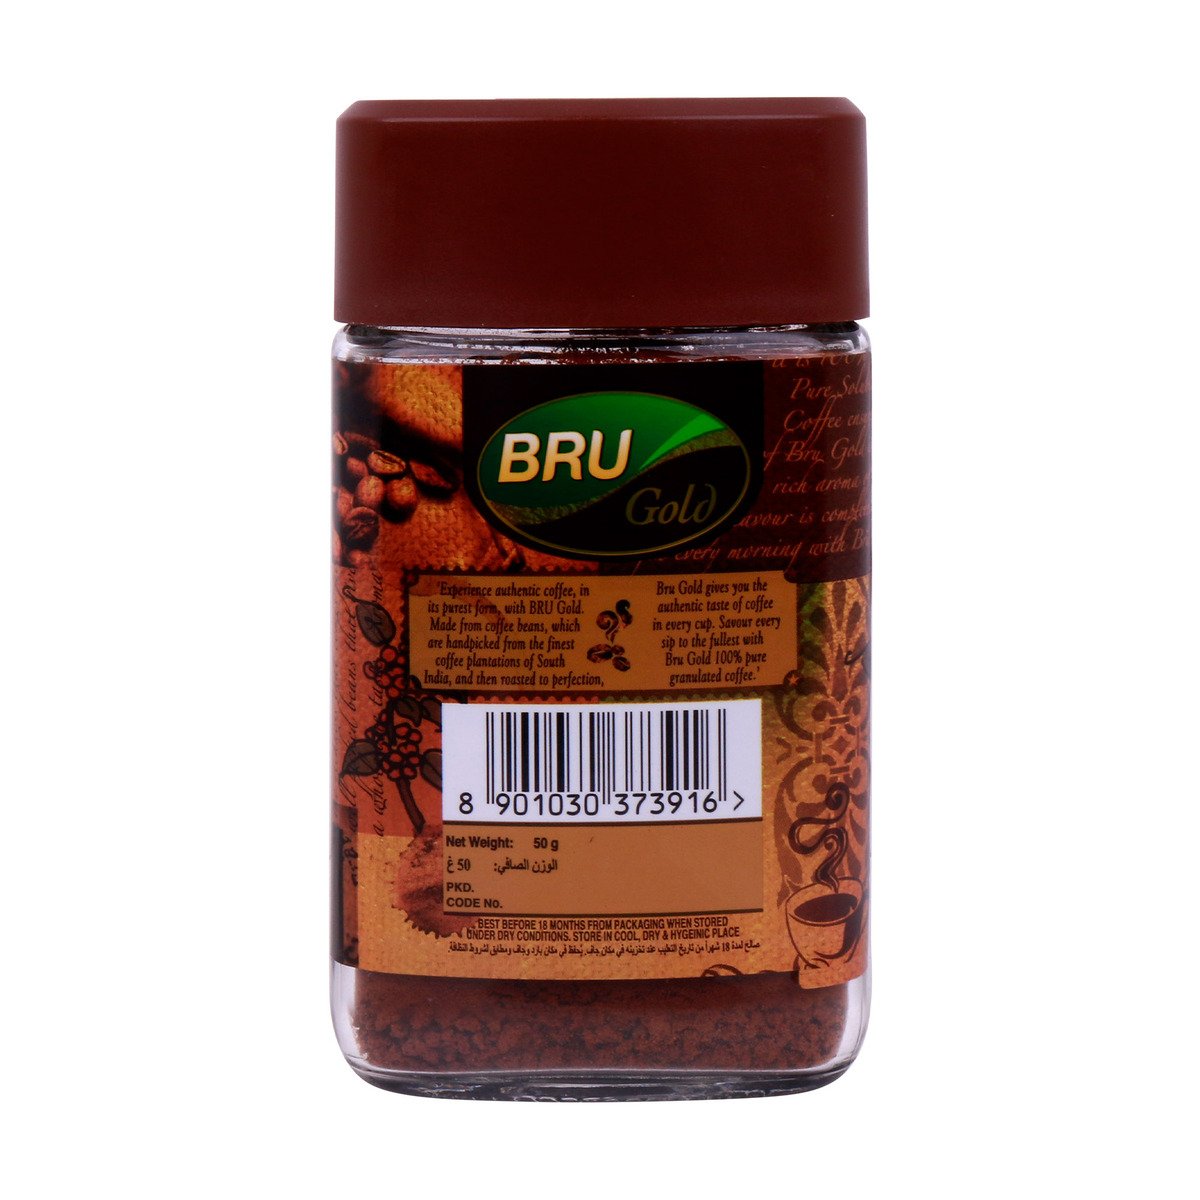 Bru Coffee Gold 50g